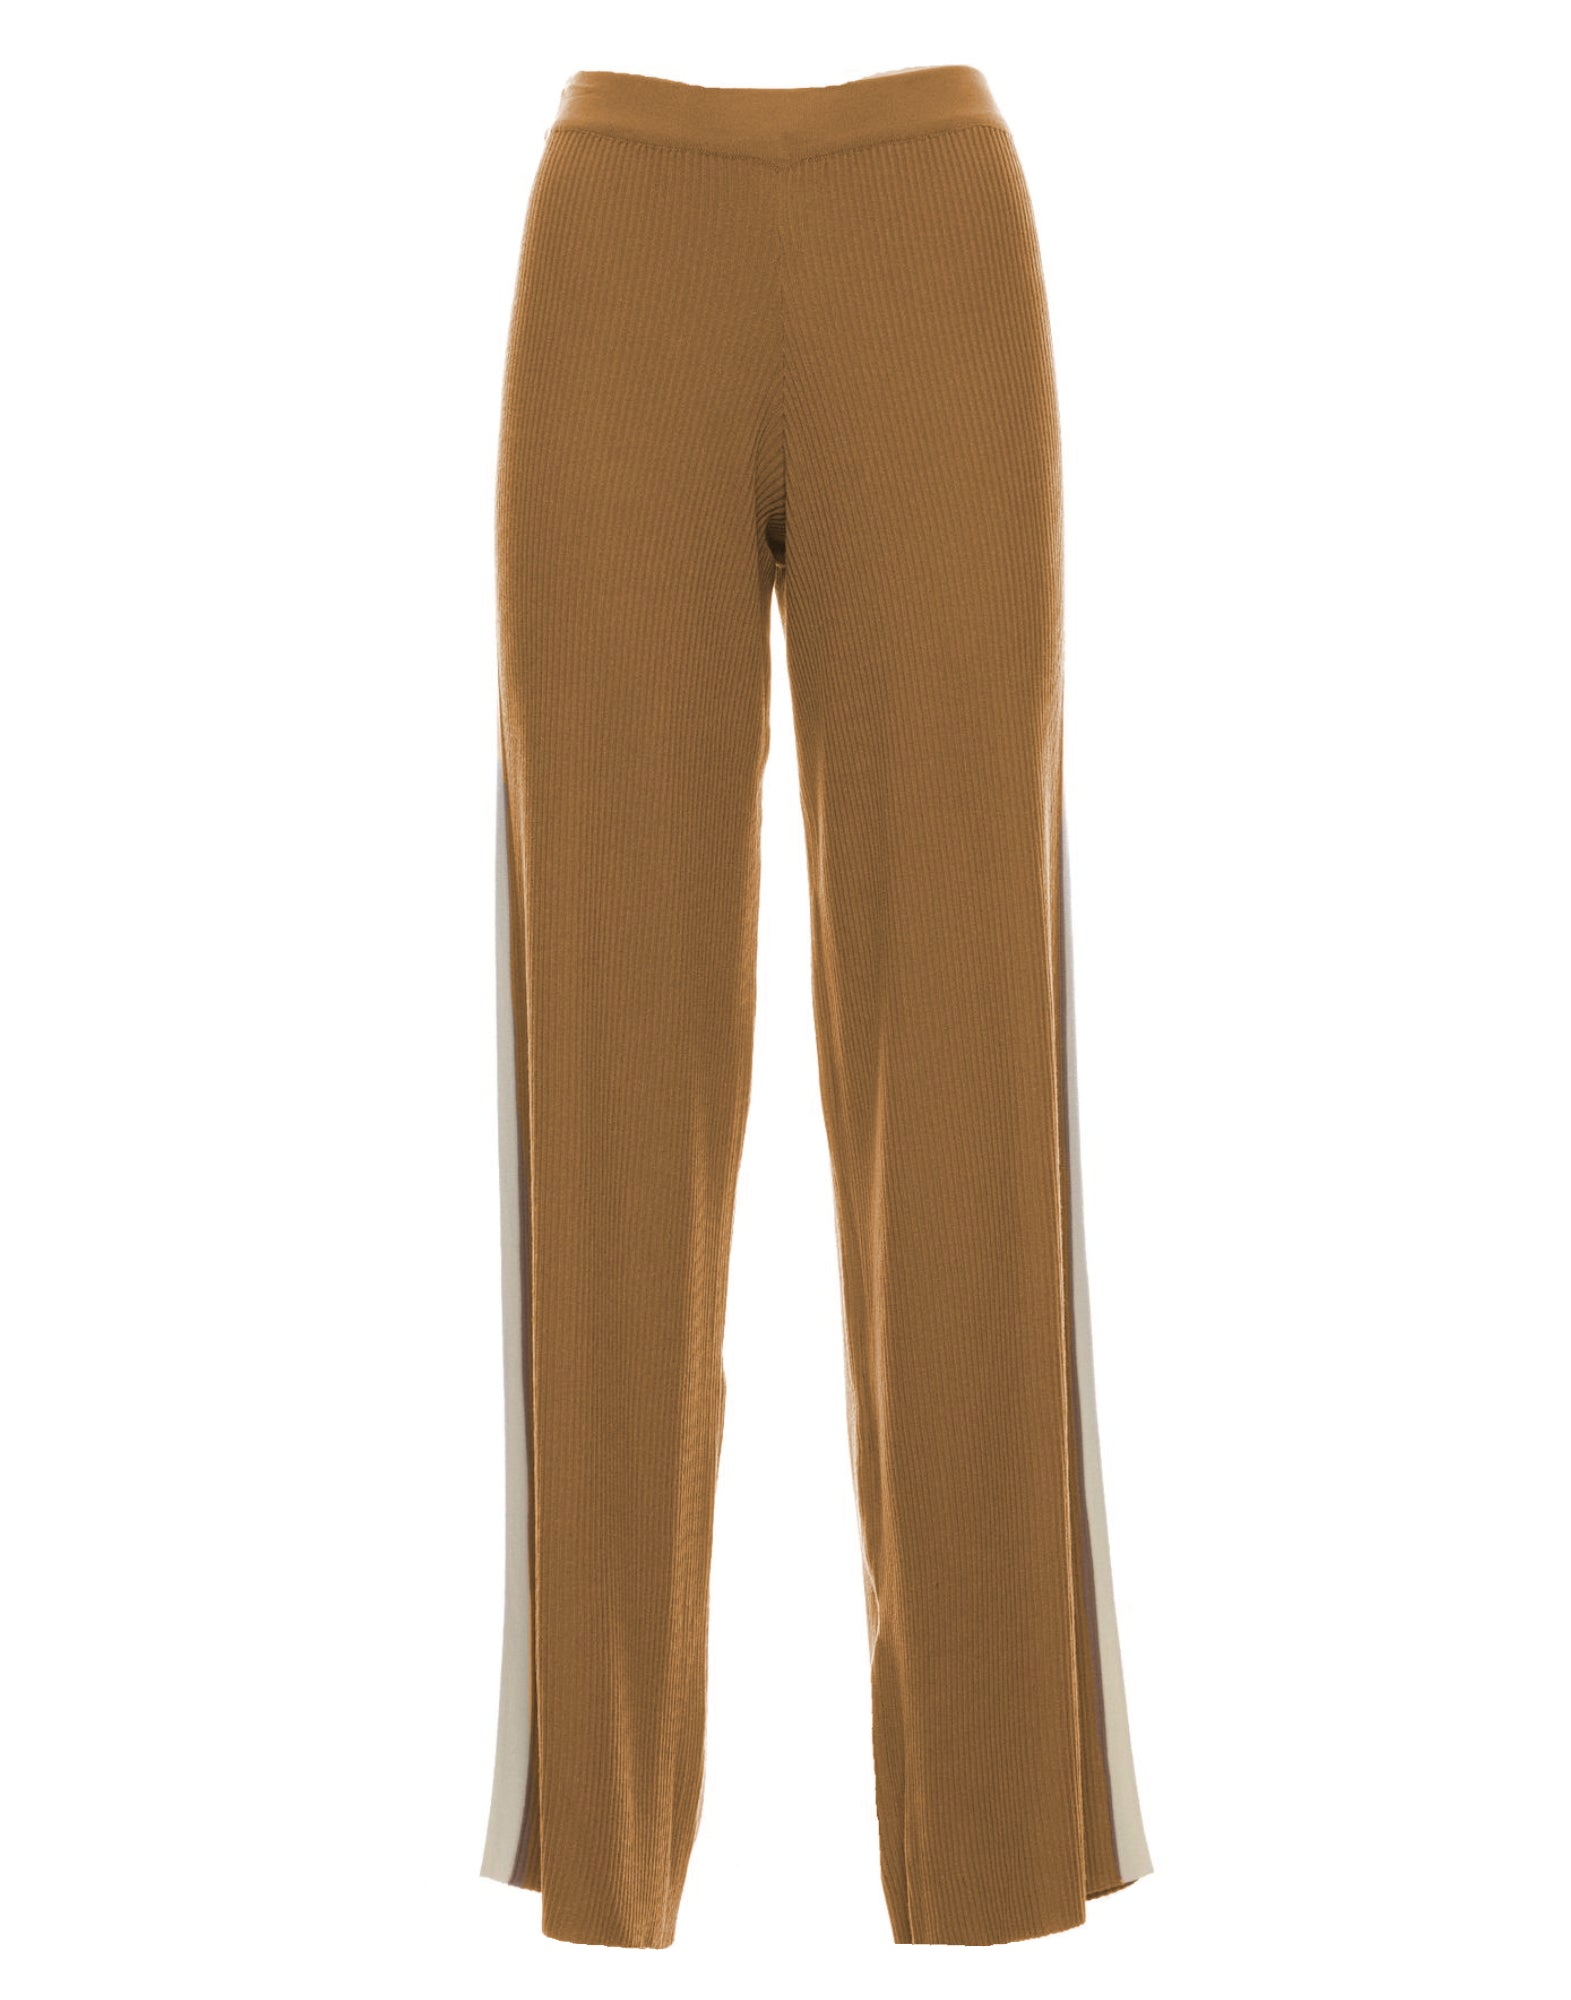 Pantaloni donna ptkd01018 beige Akep